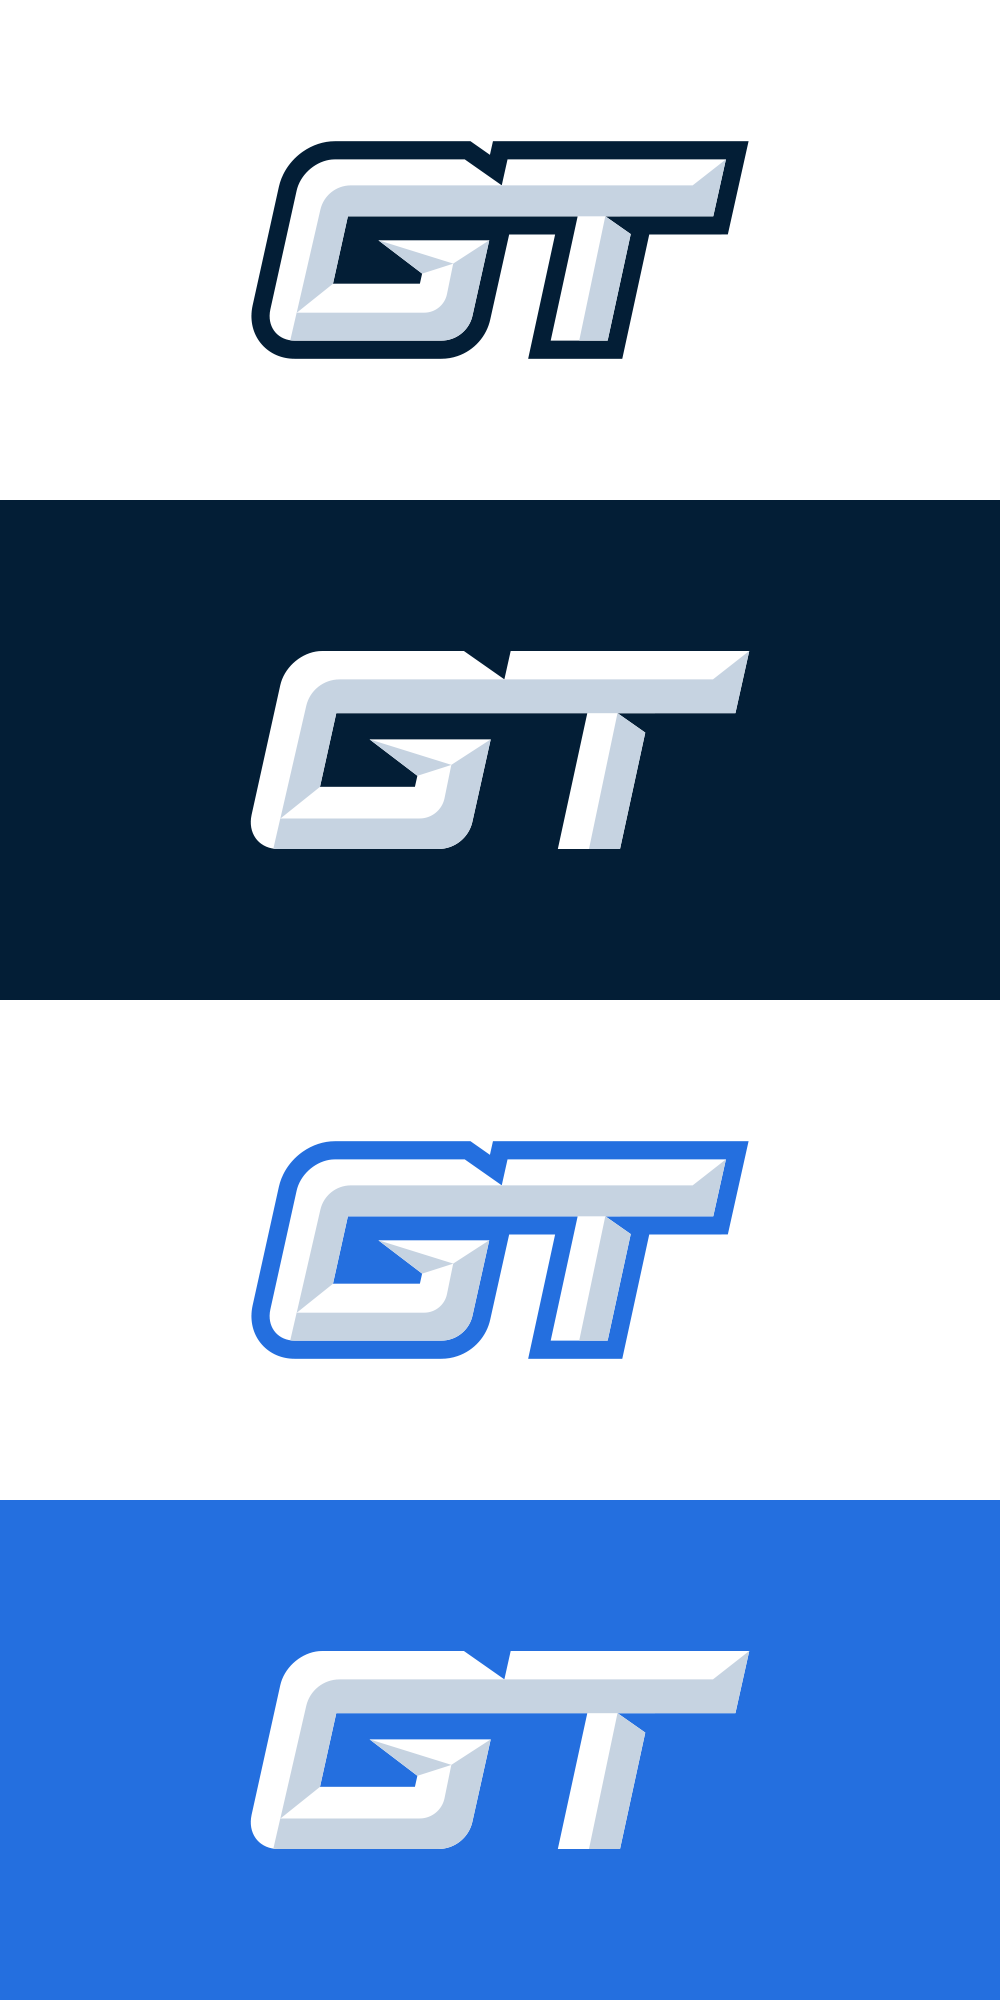 Gt modern letter logo design with swoosh Vector Image